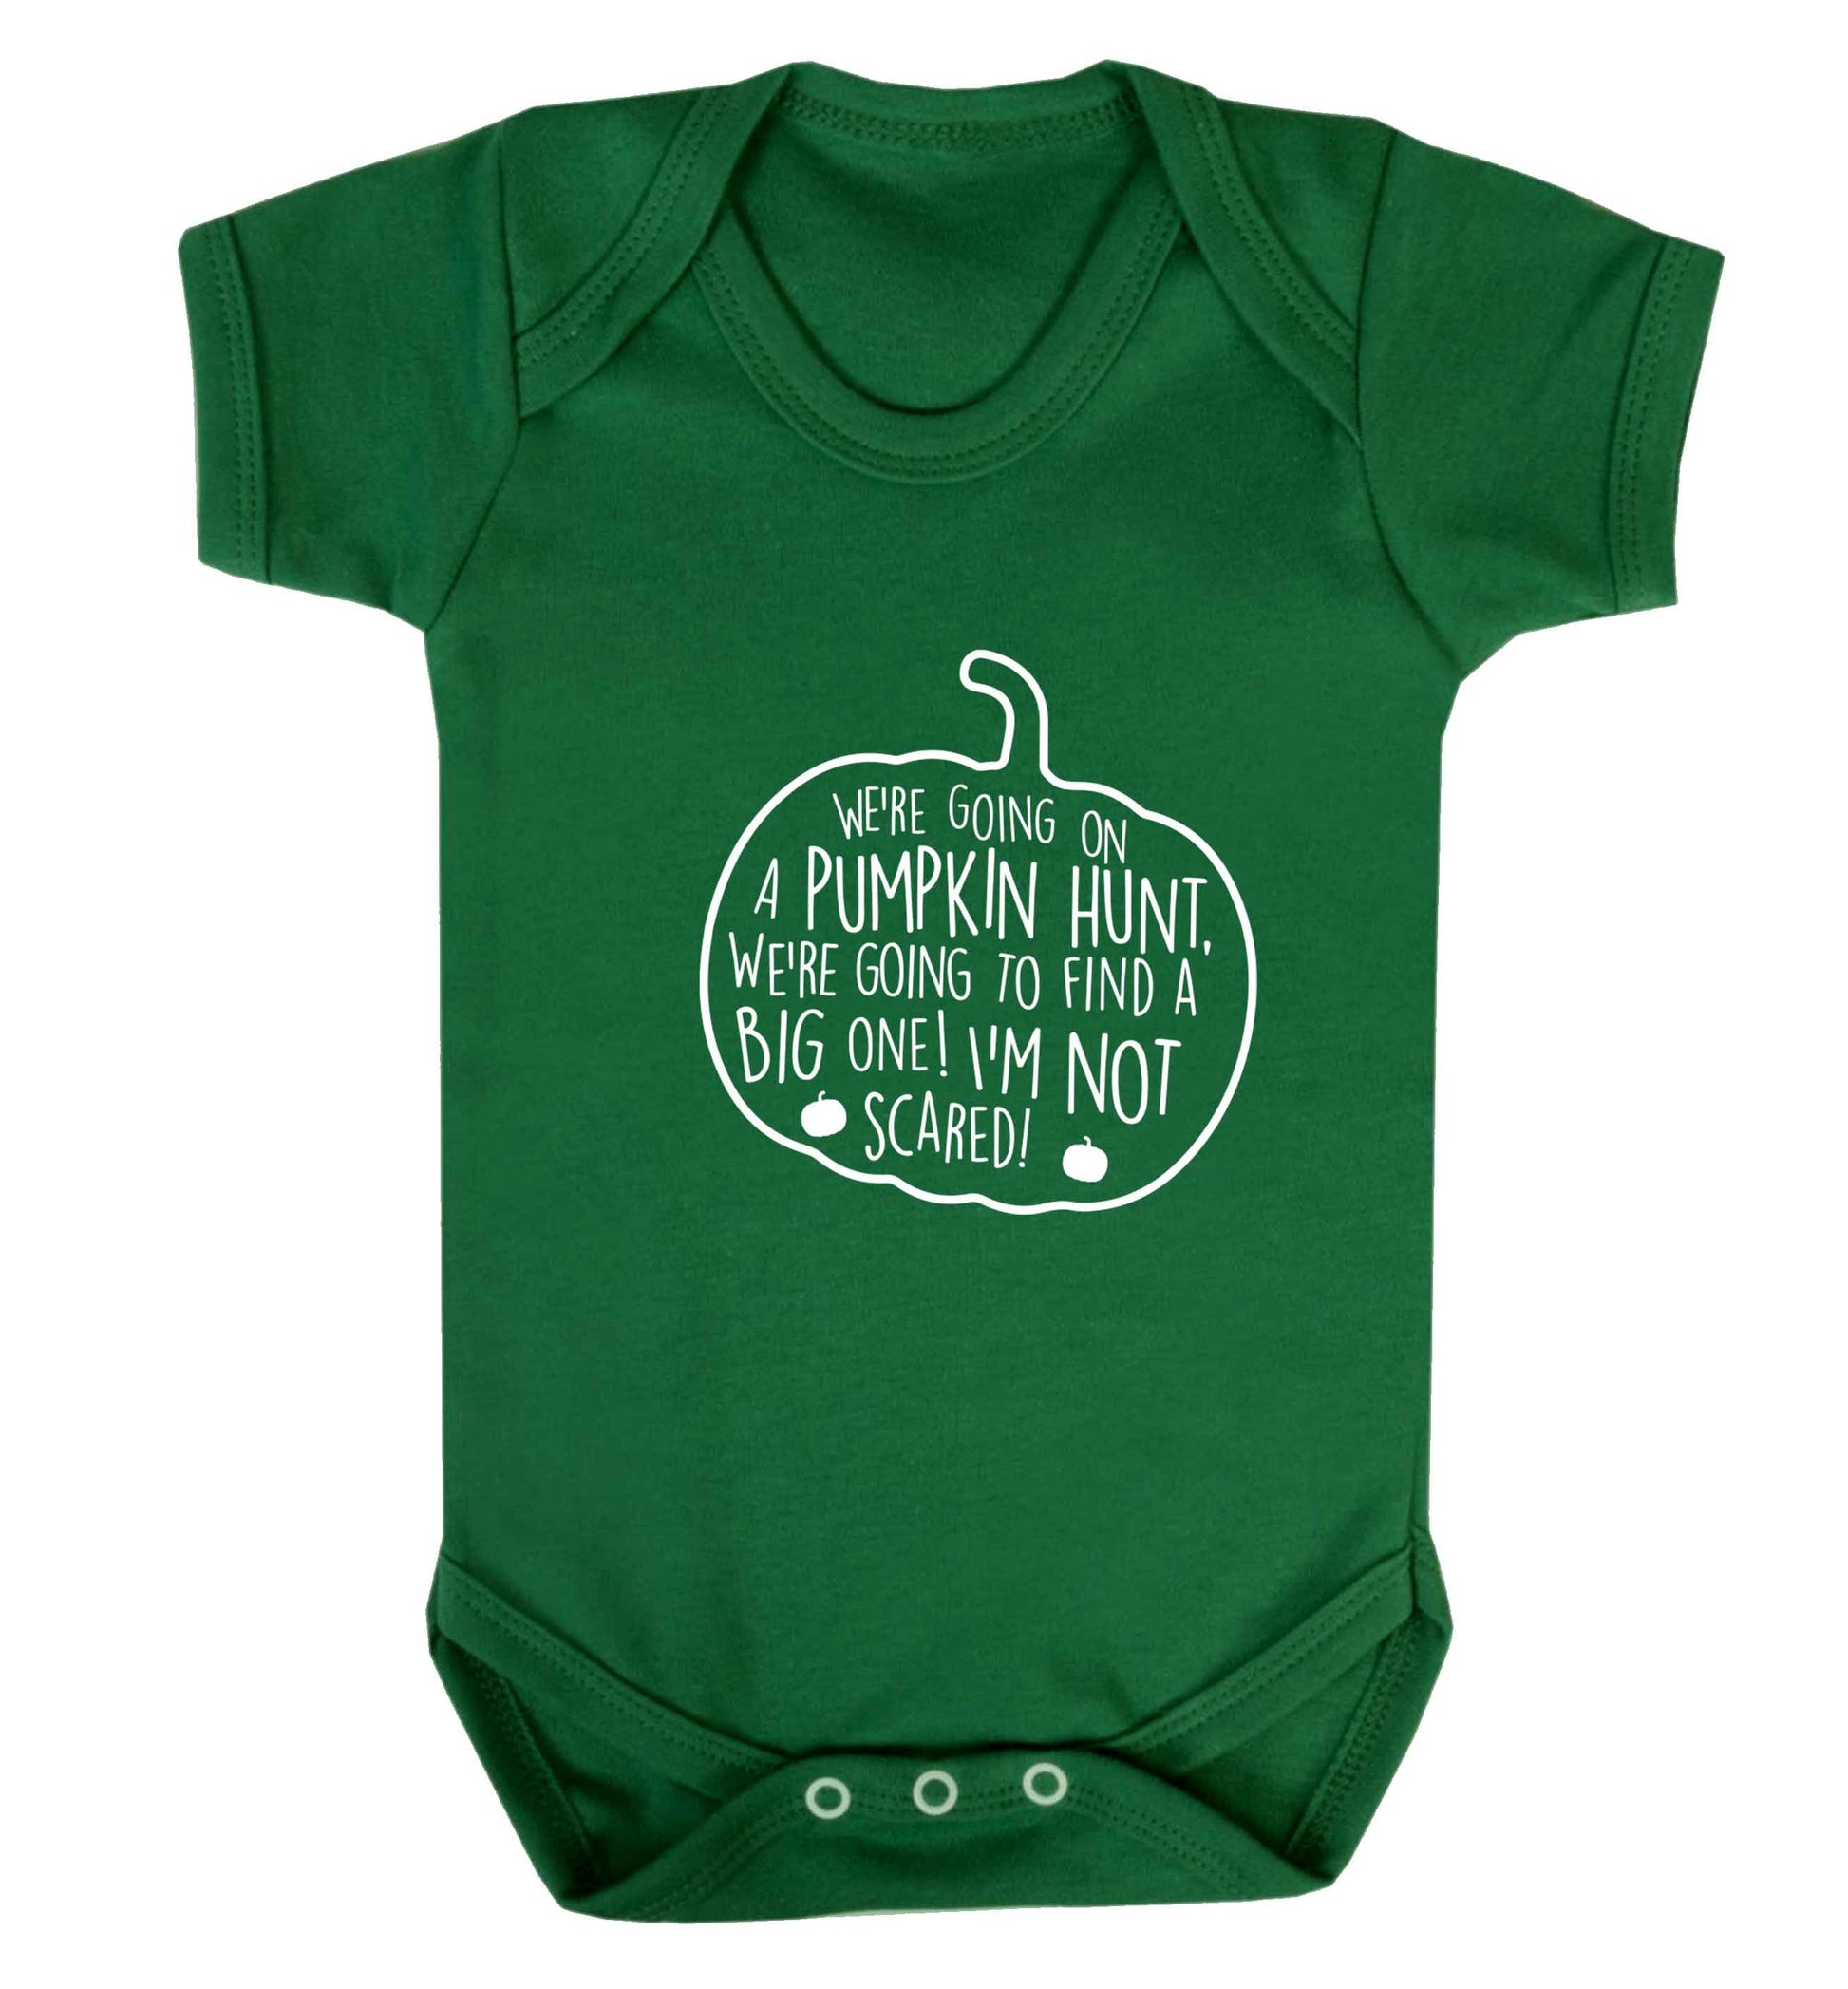 We're going on a pumpkin hunt baby vest green 18-24 months